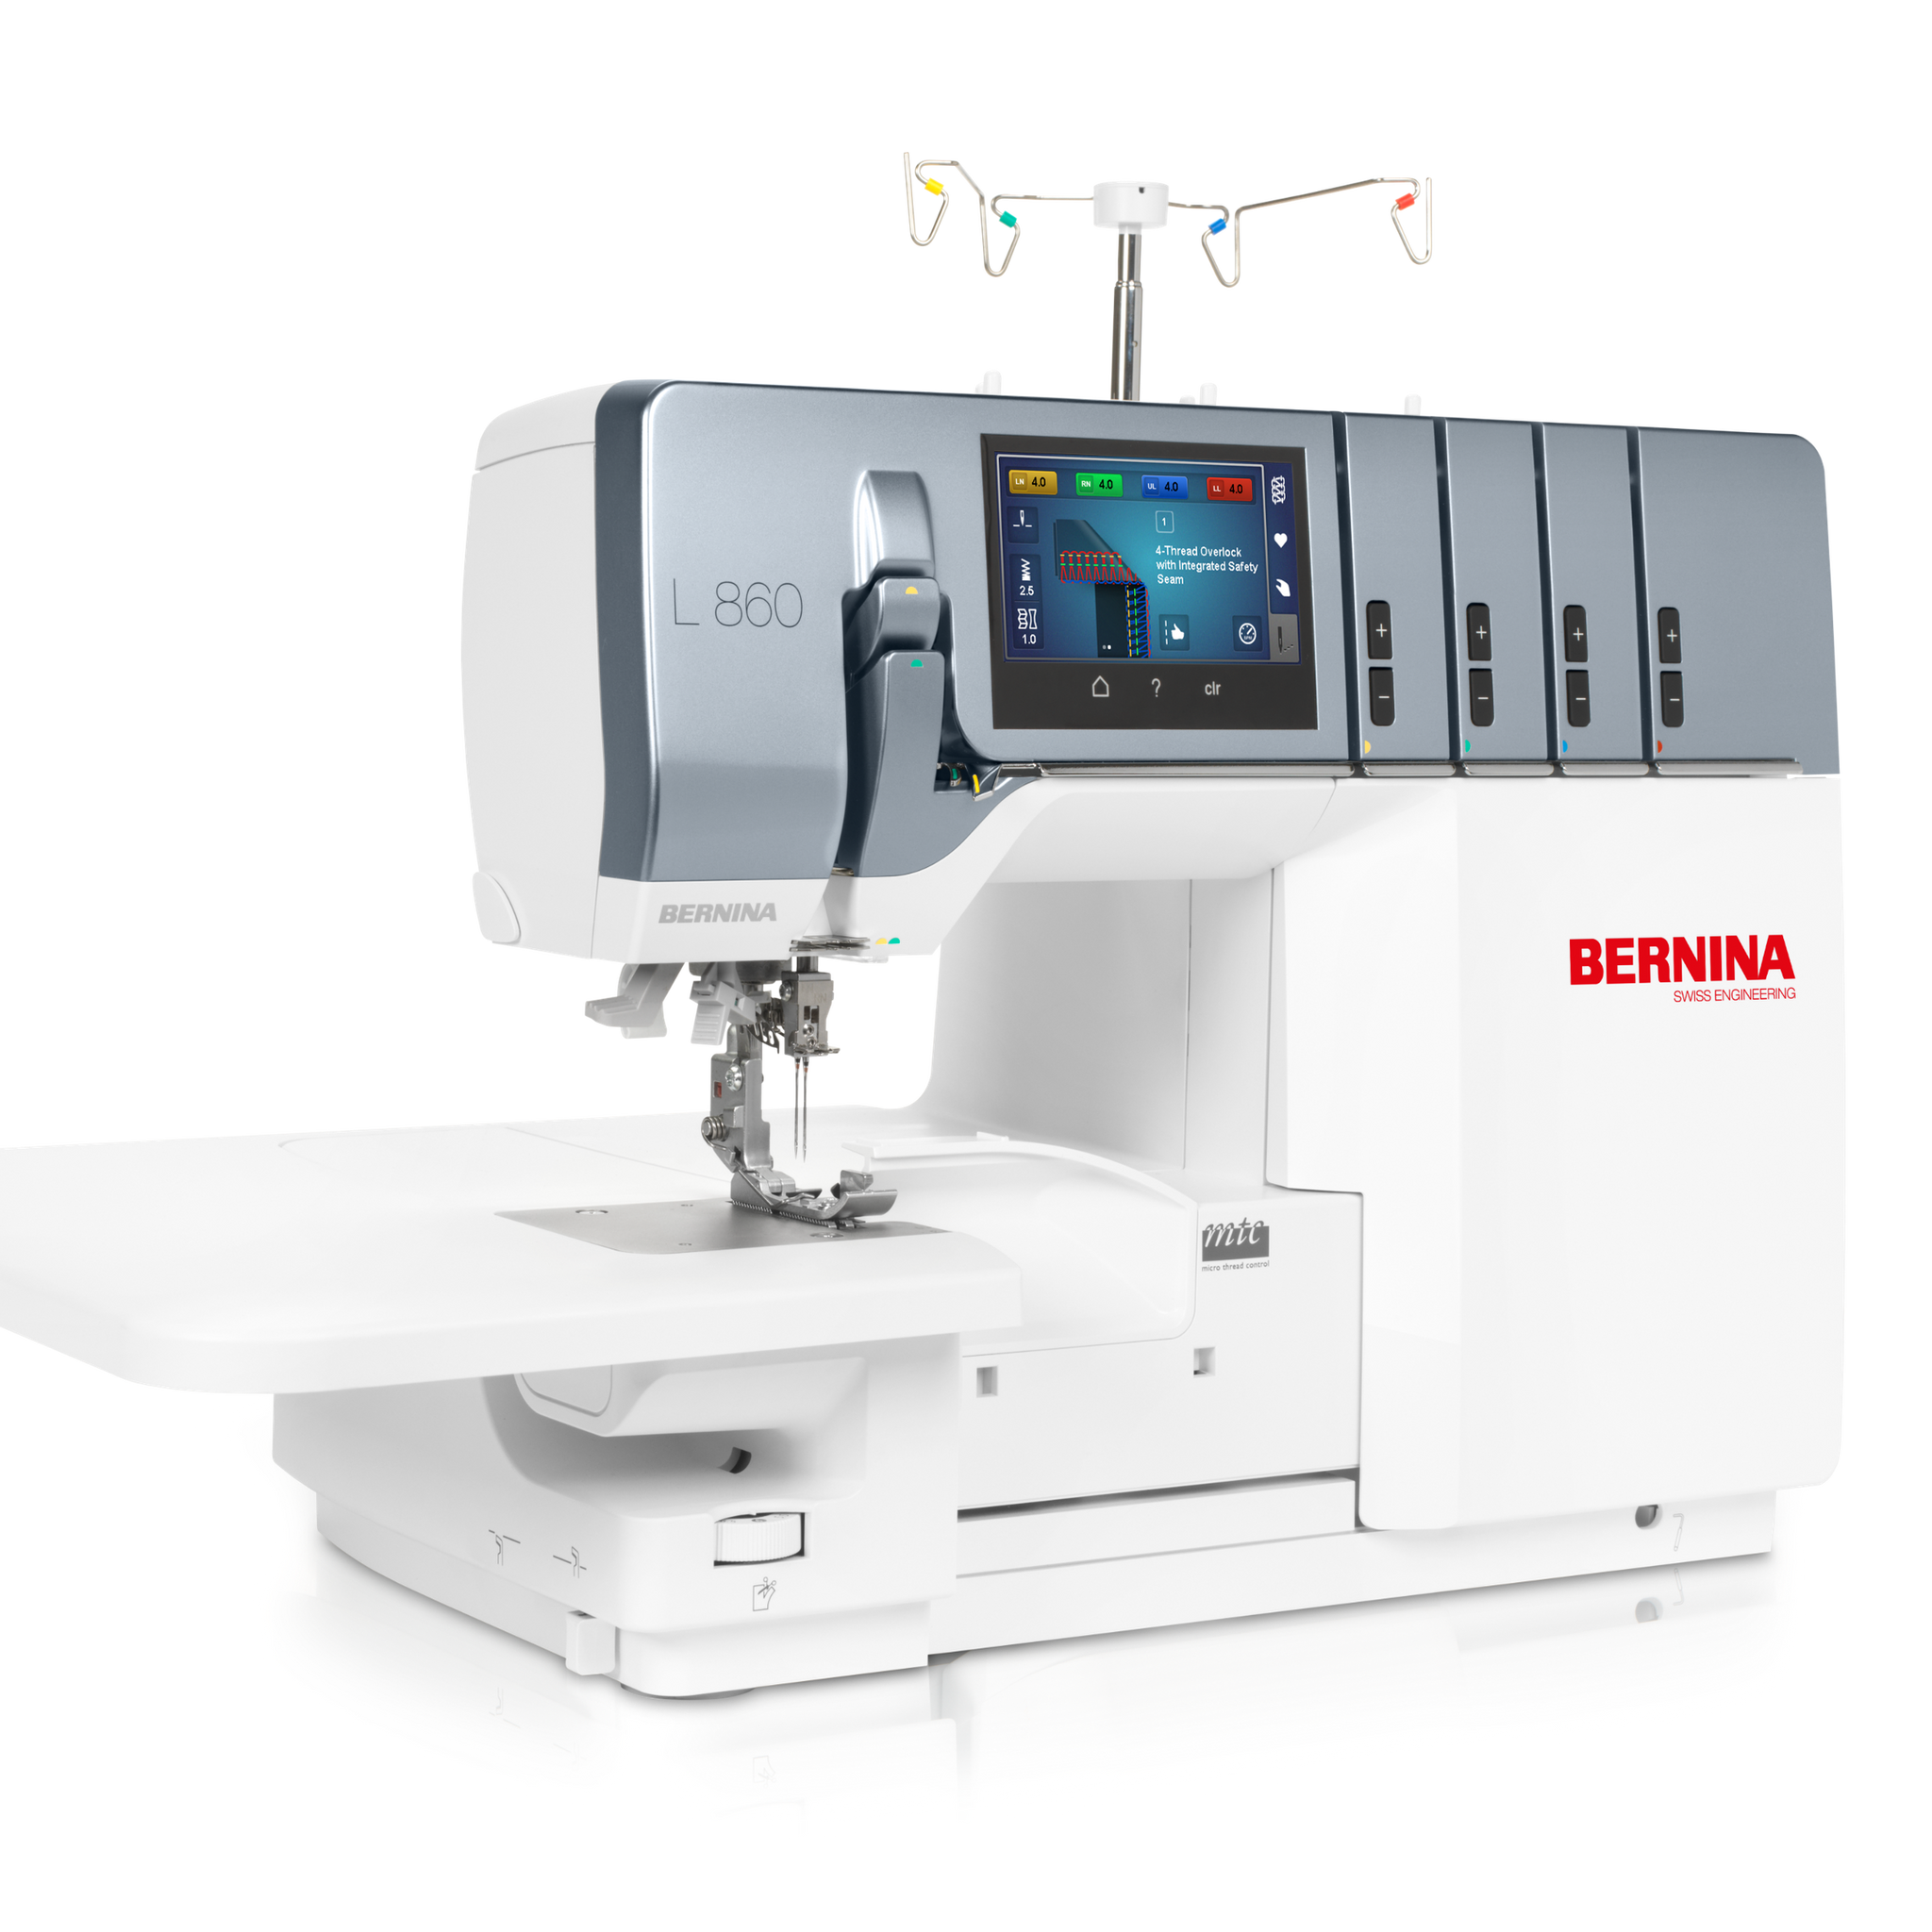 BERNINA-L860 Serger-sewing machine-gather here online